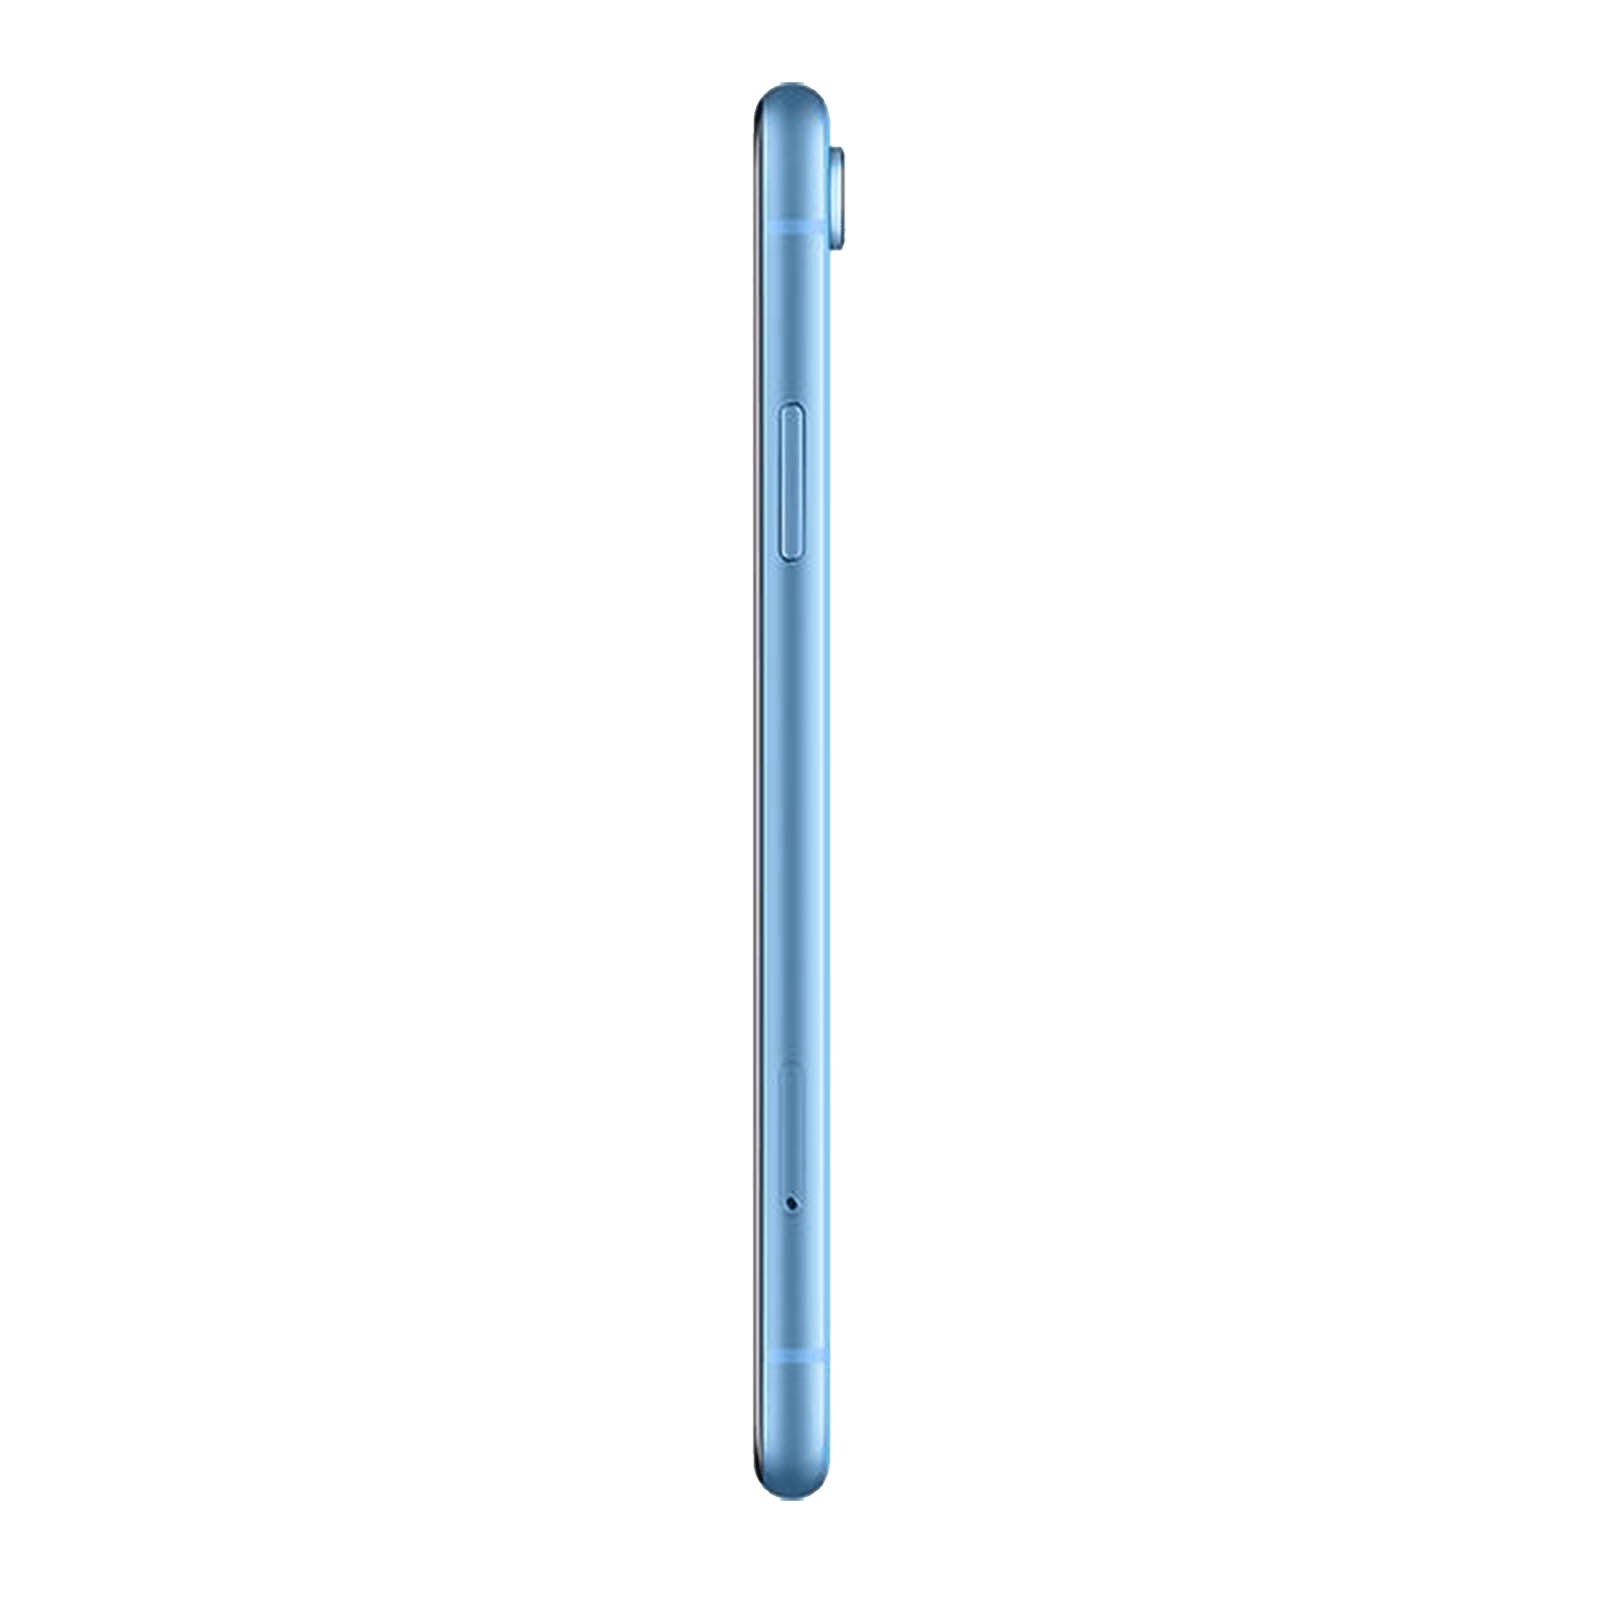 Apple iPhone XR 128GB Blue Good - Verizon